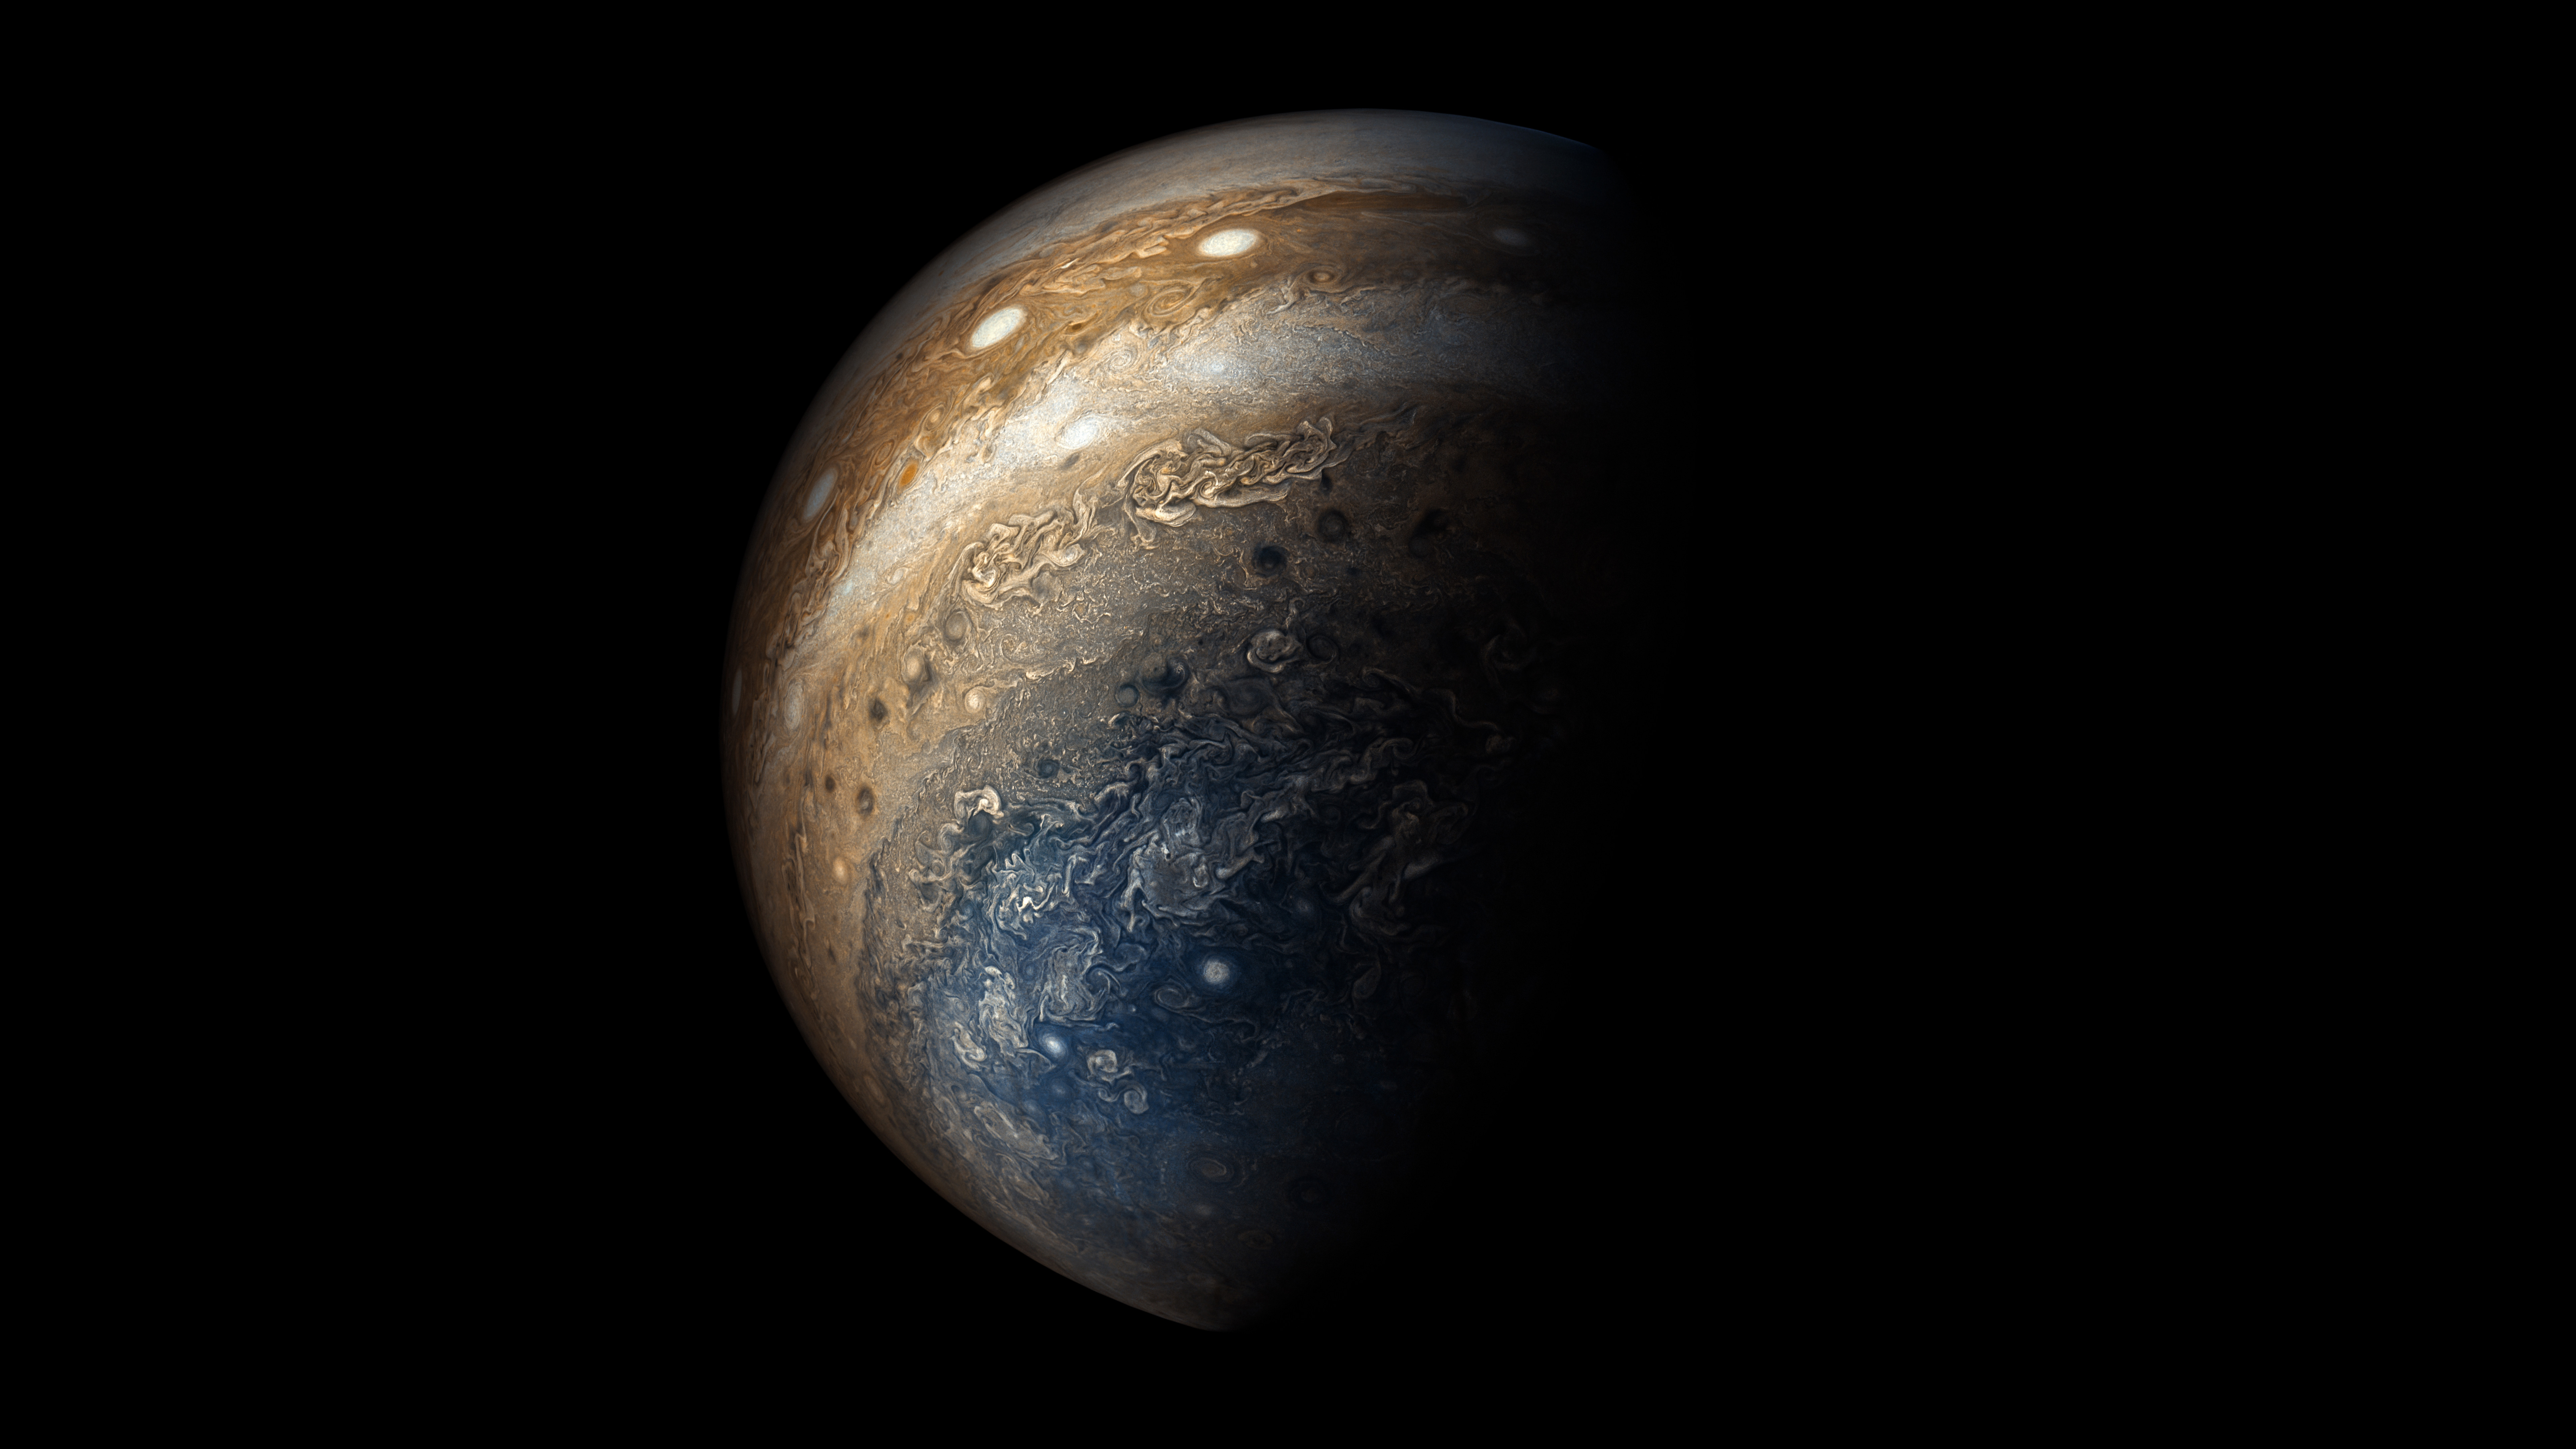 General 7680x4320 Jupiter planet space NASA science dark blue brown universe Solar System